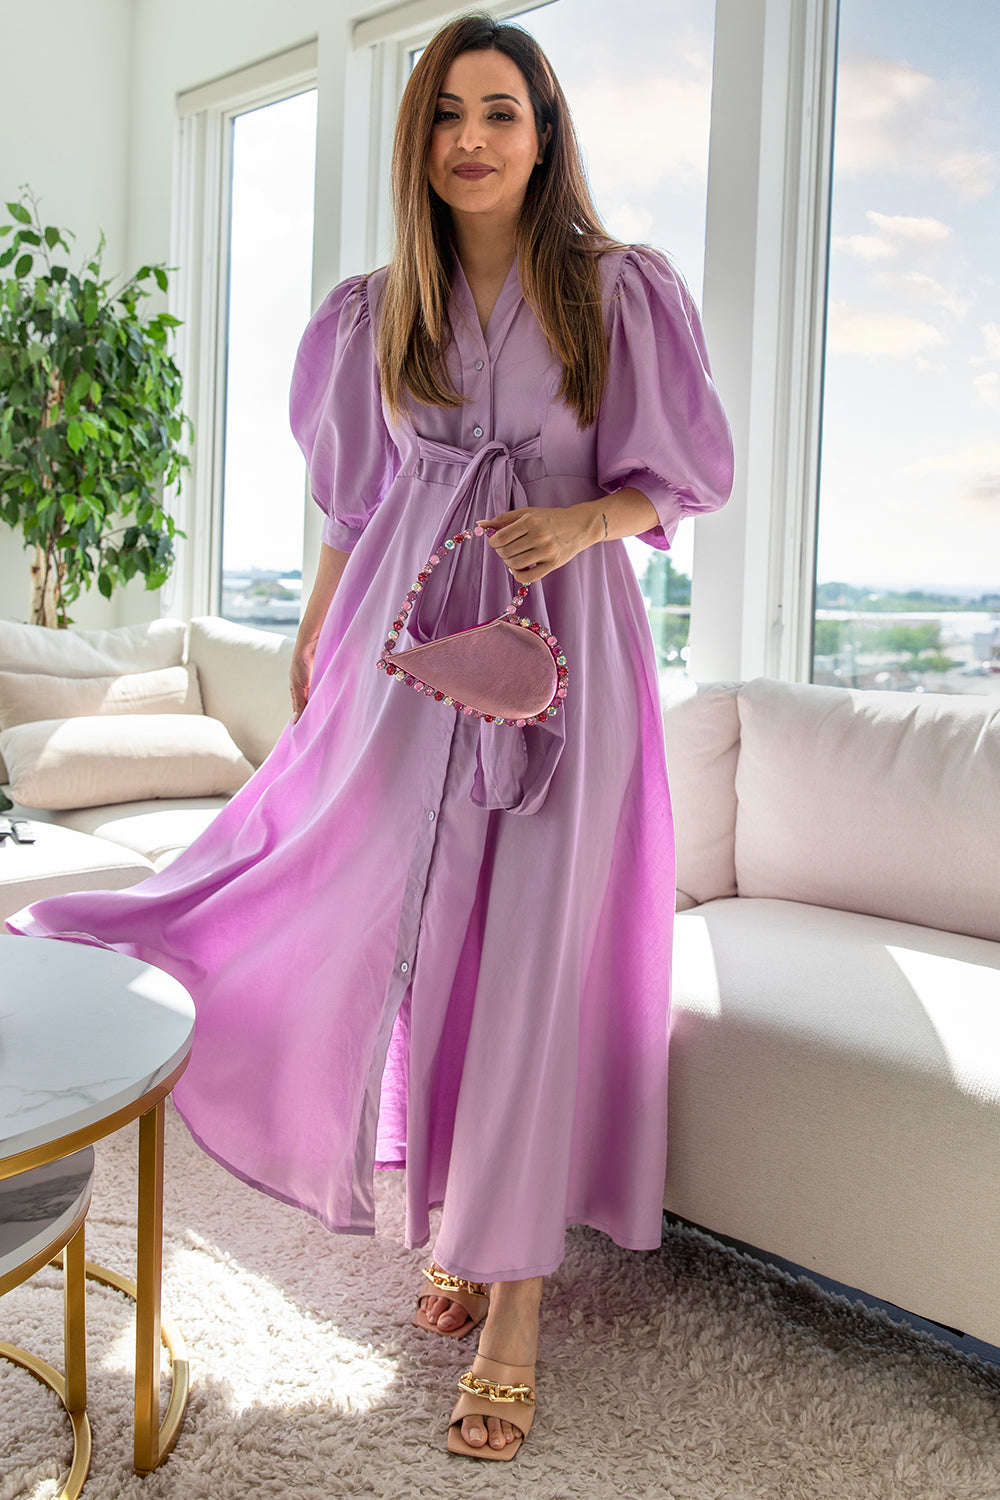 Kompal Matta Kapoor In Lavender Slay Dress